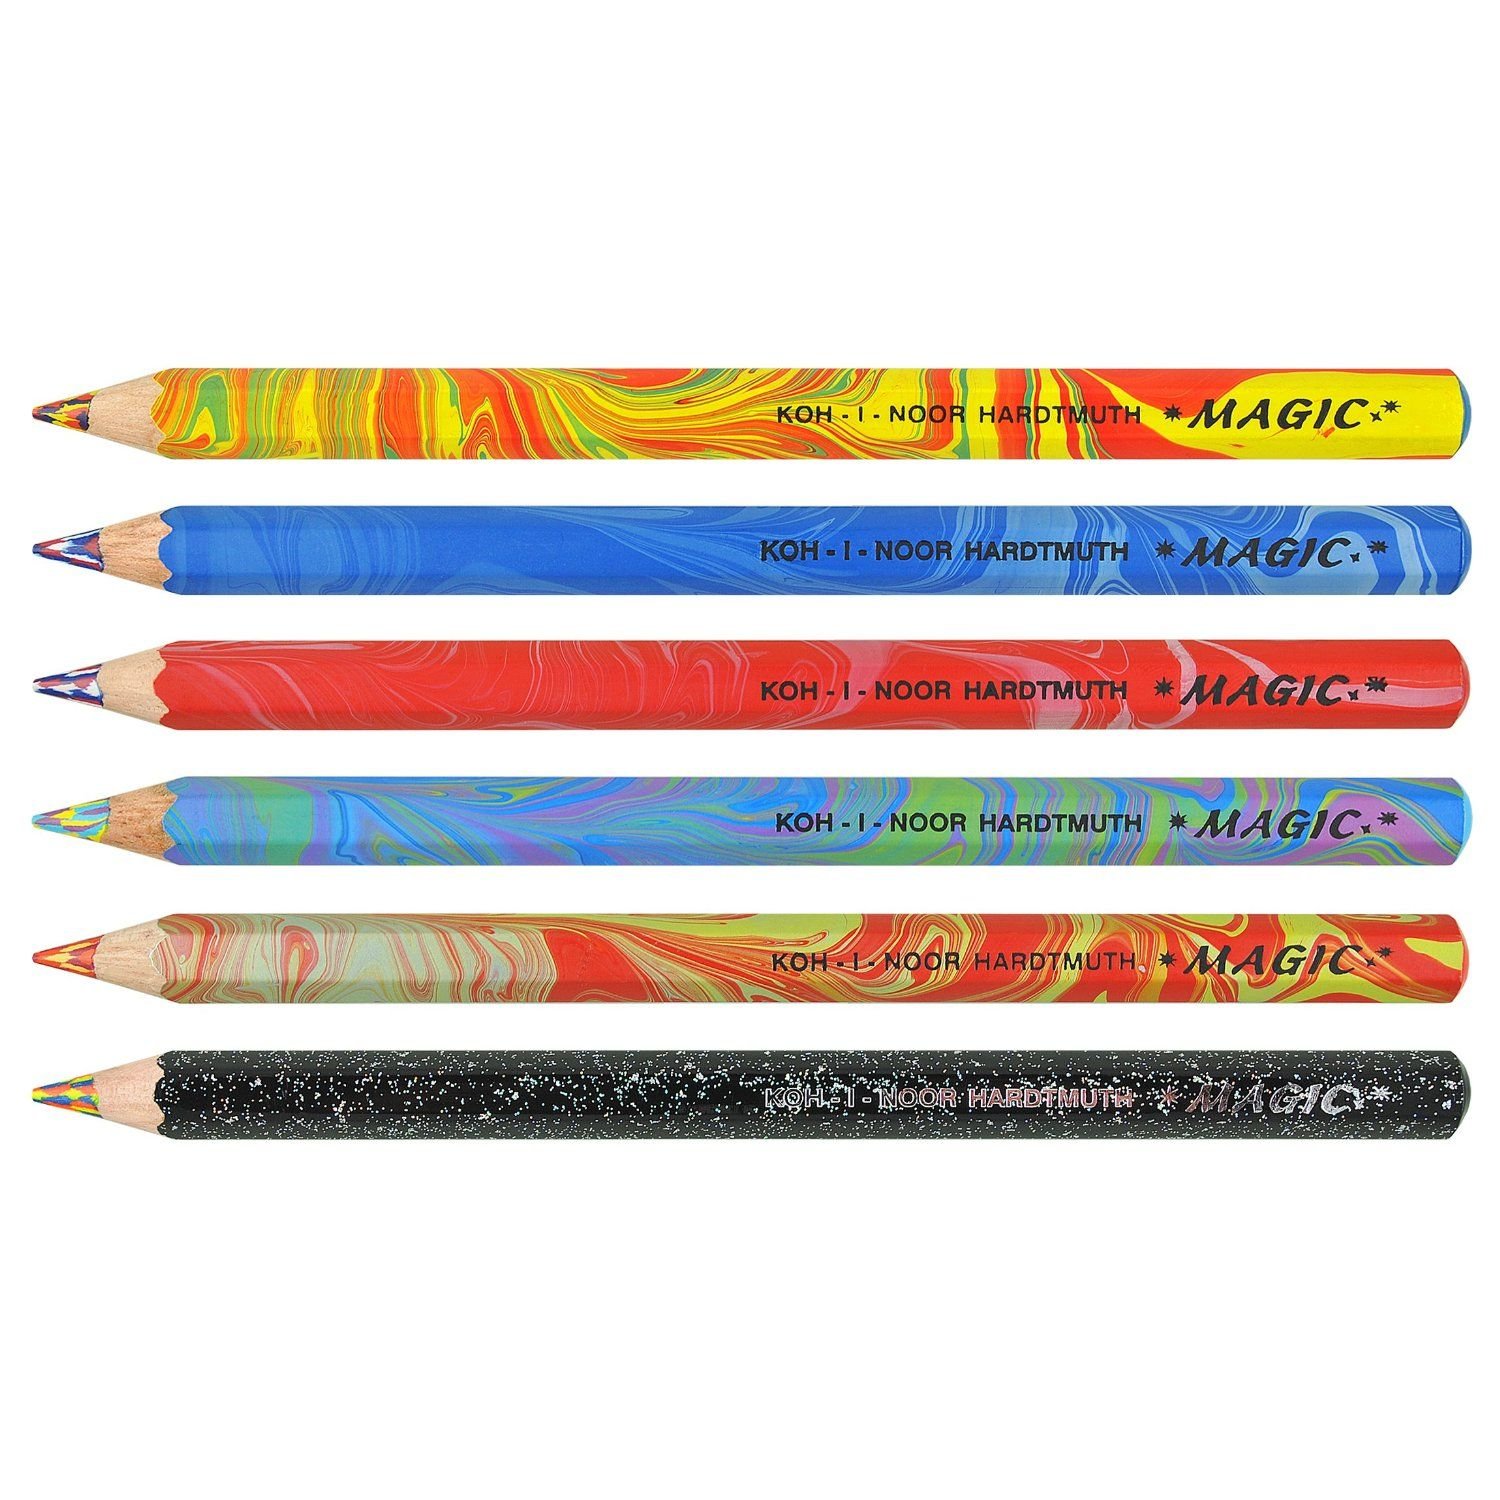 Magic pencil. Koh i Noor Magic карандаши. Многоцветный карандаш Koh-i-Noor. Koh-i-Noor Hardtmuth Magic. Koh i Noor multicolored Pencils.